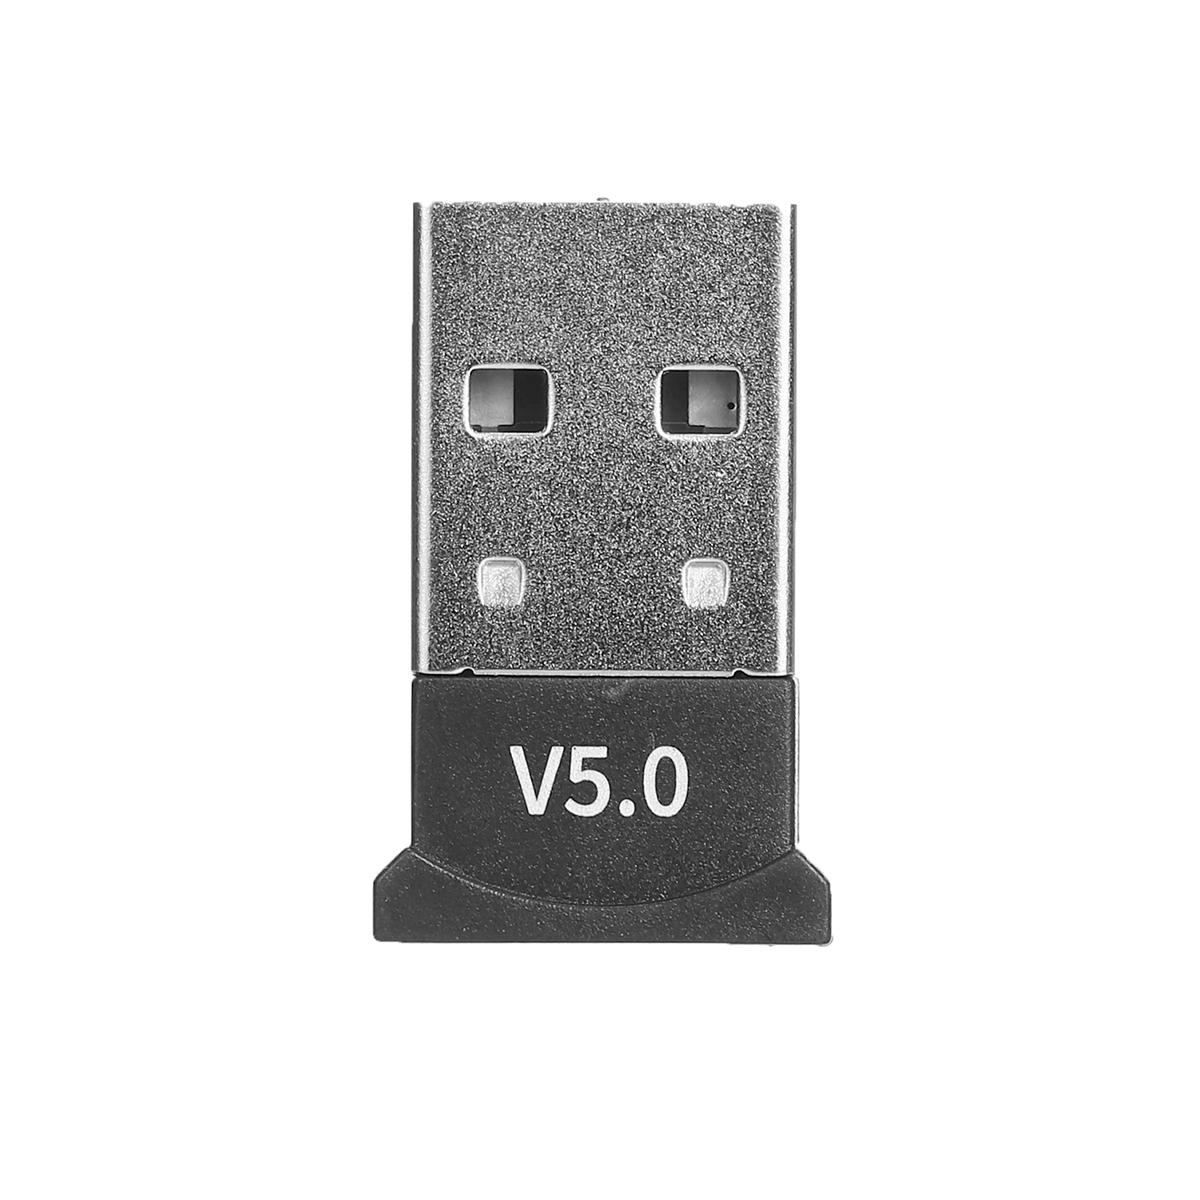 Bluetooth 5.0 Adaptador USB para Windows 7/8/10 para Vista XP para PC Mac OS X Teclado ratón Gamepads Altavoces